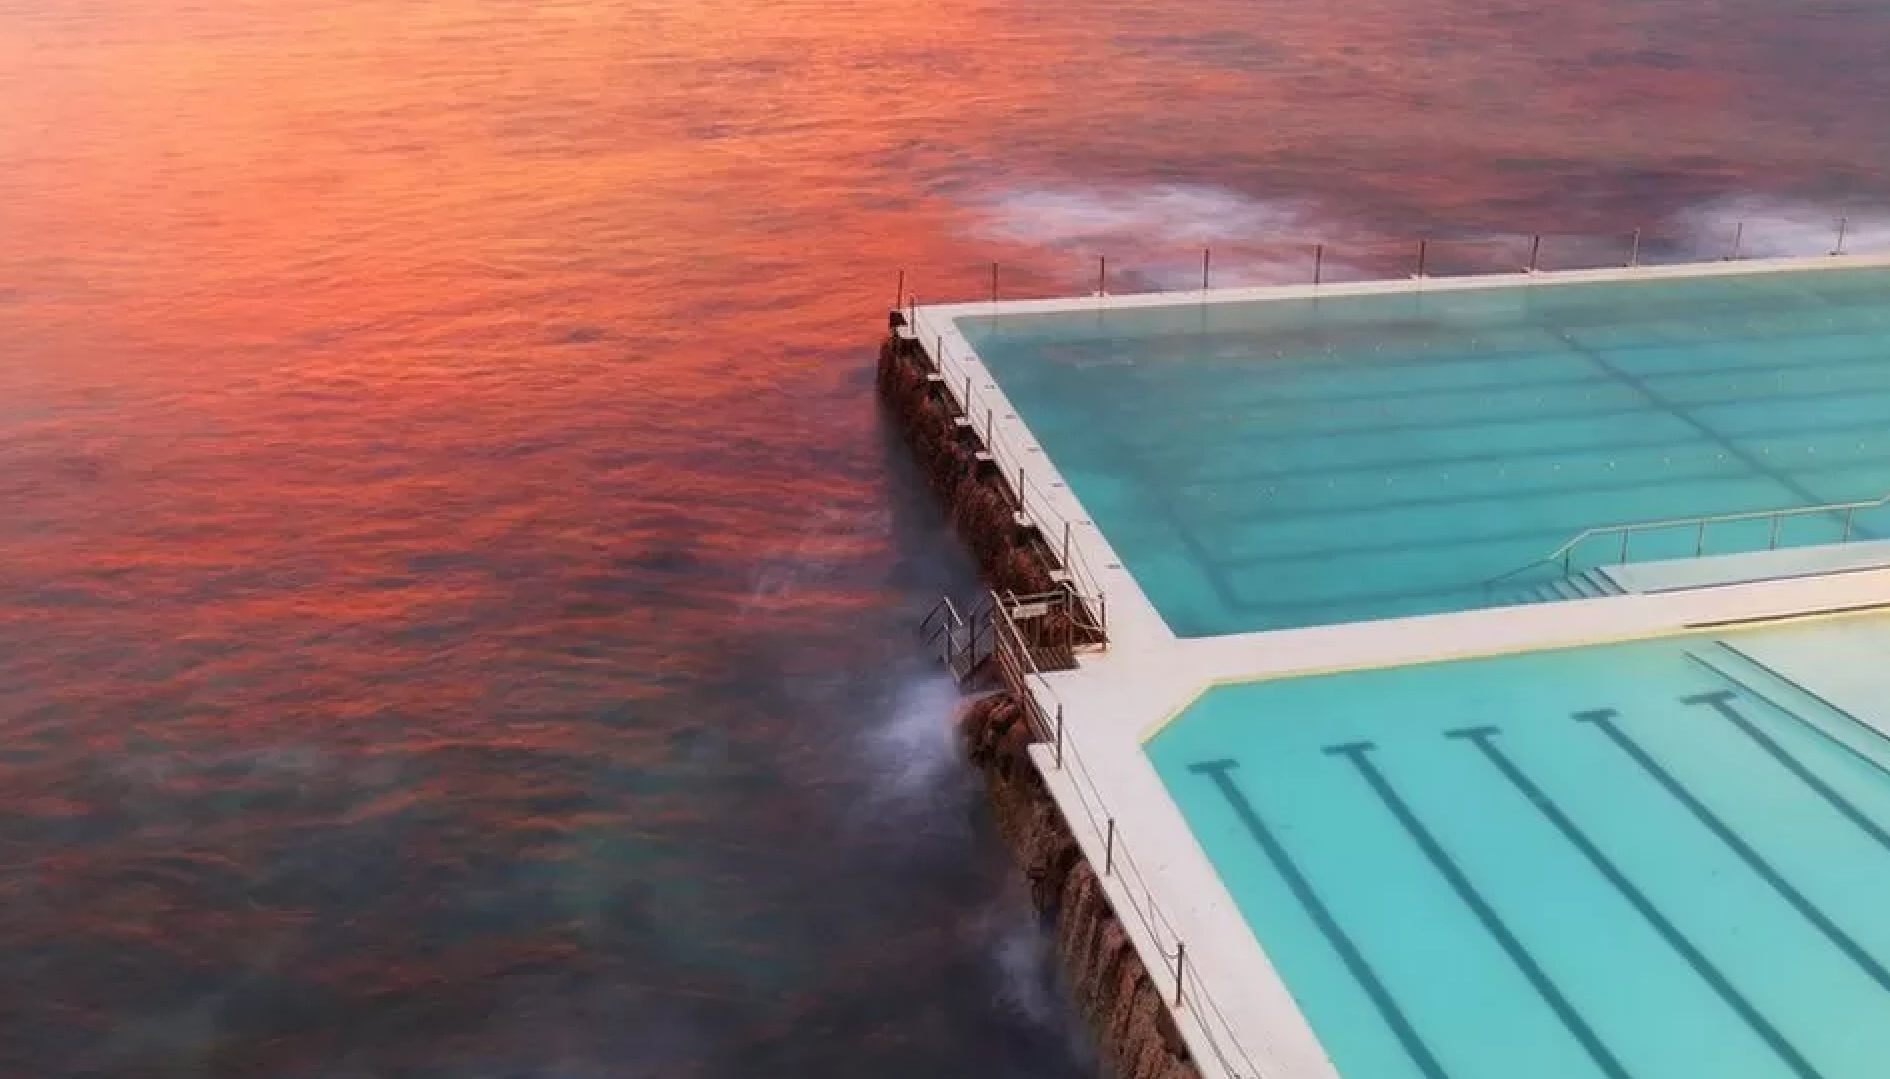 Outdoor ocean pool, Sydney Australia